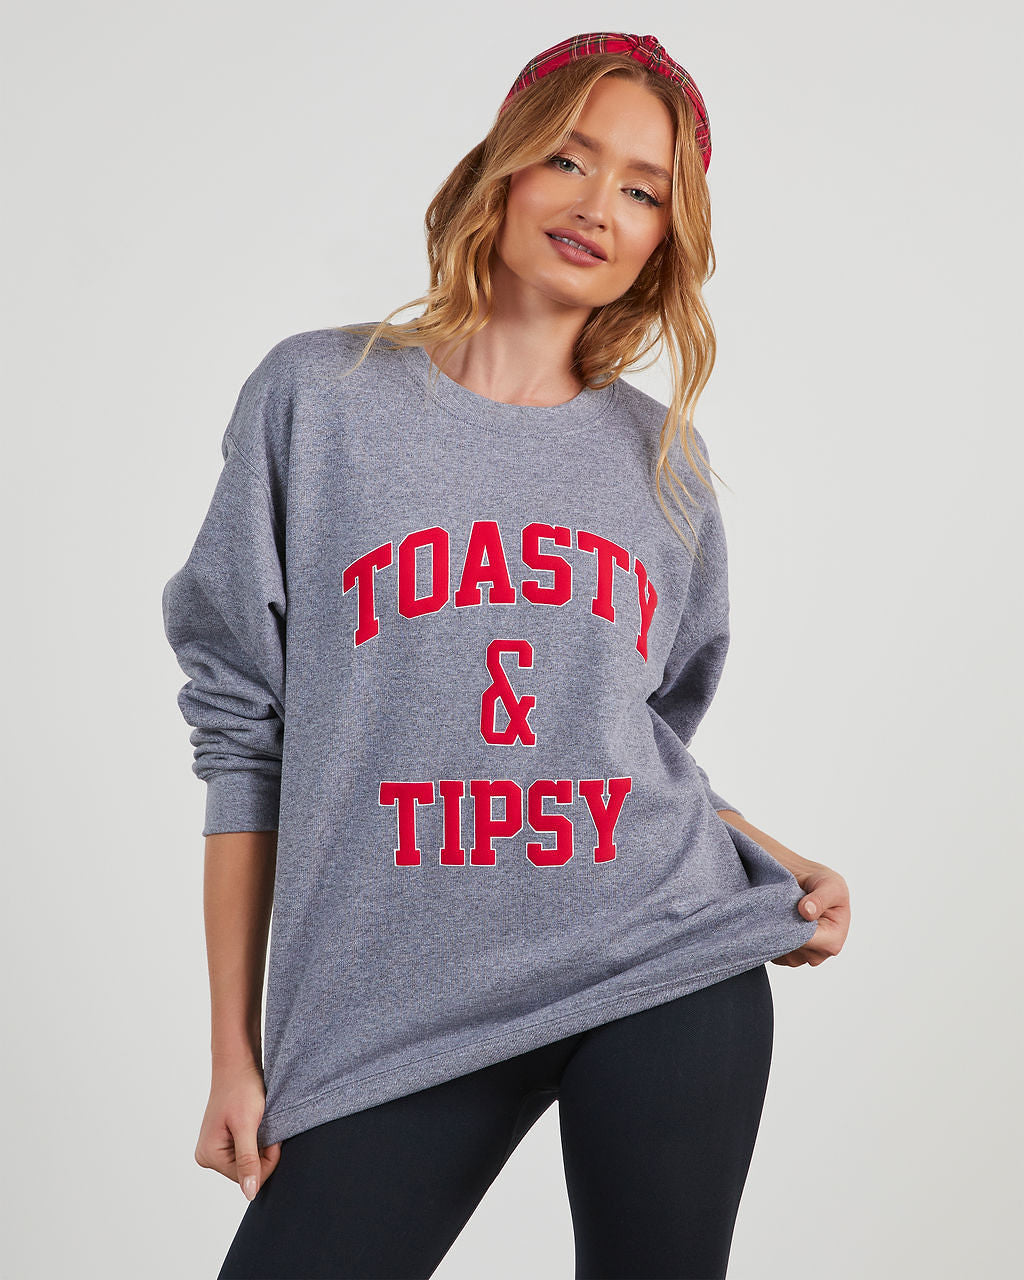 

Toasty & Tipsy Oversized Graphic Sweatshirt